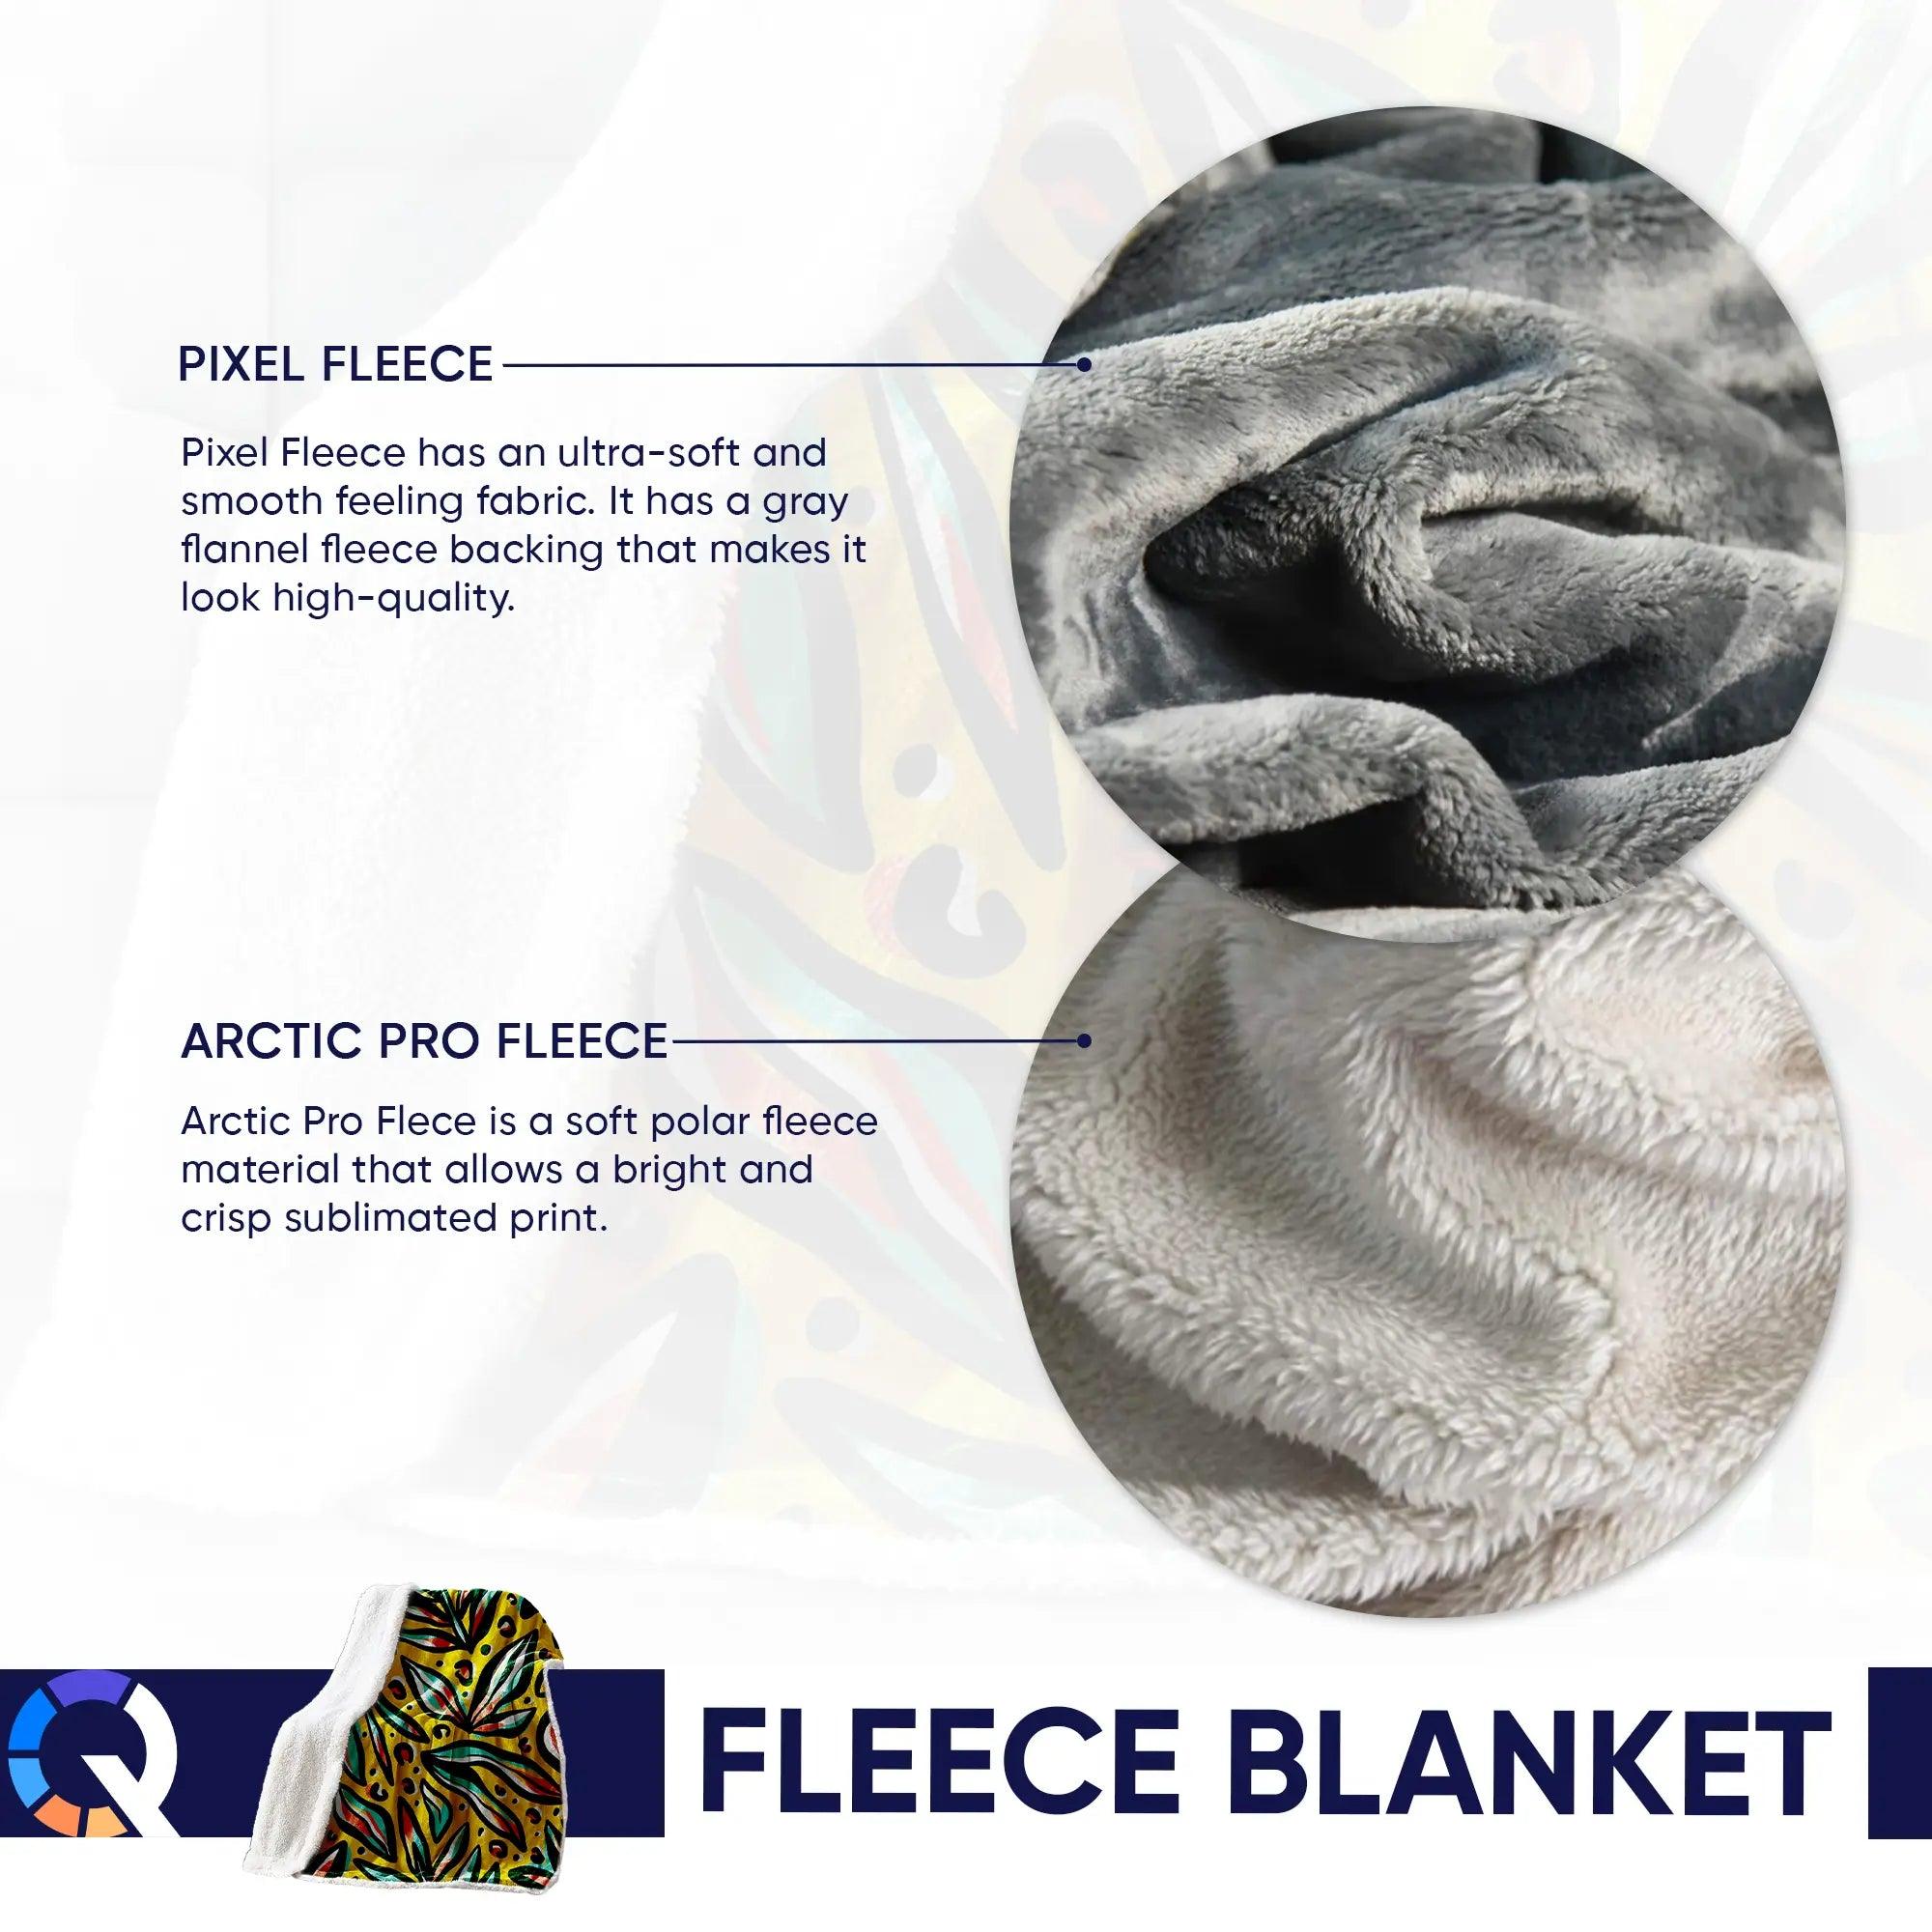 Sublimate A Polyester Blanket - Pro World Inc.Pro World Inc.